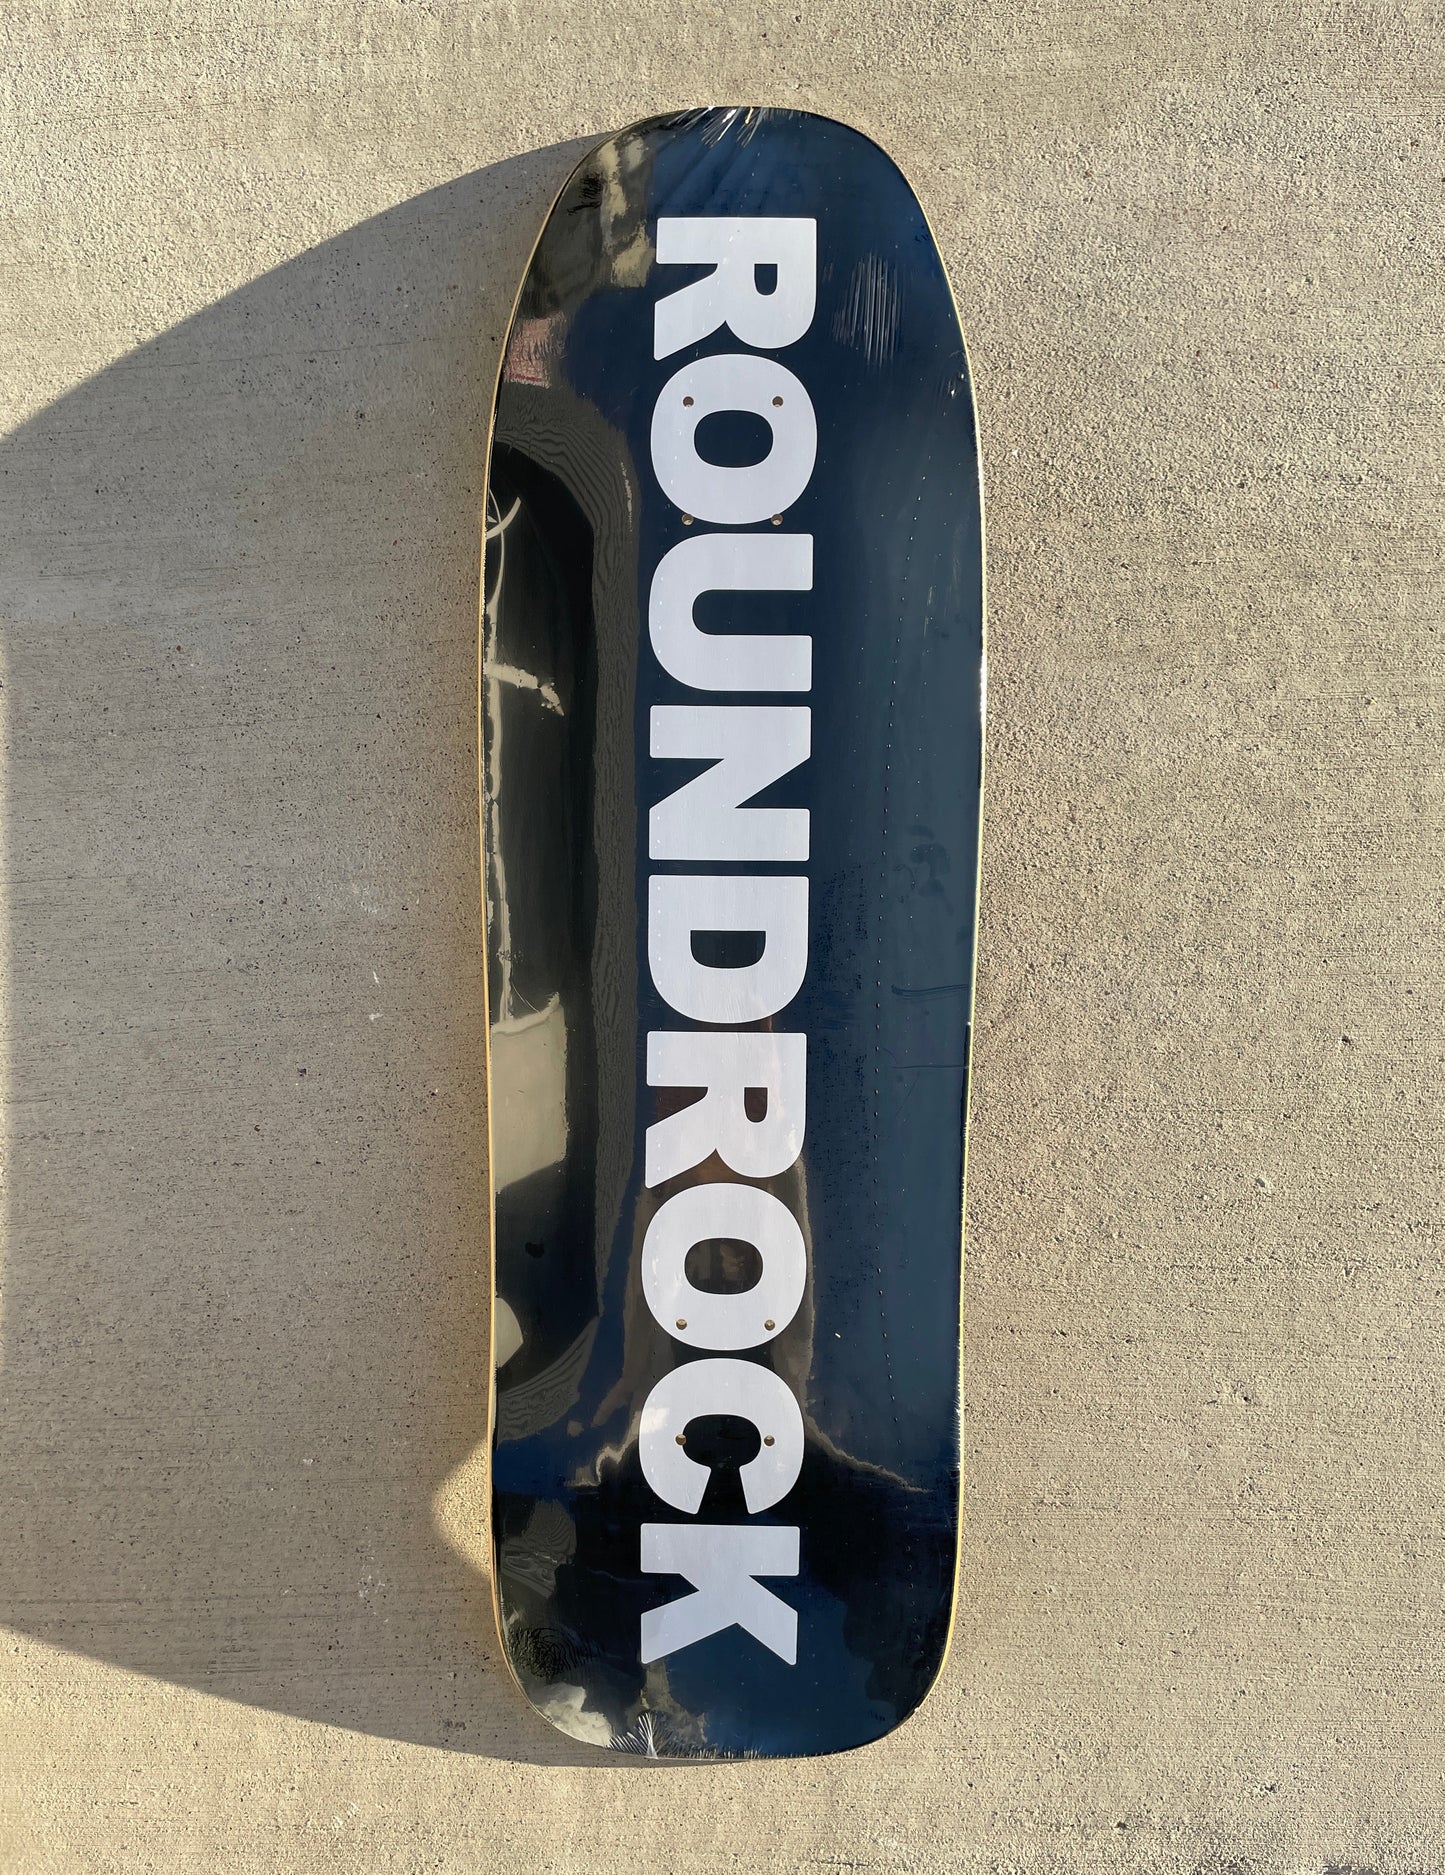 RRSB Round Rock Text BW Skateboard Deck